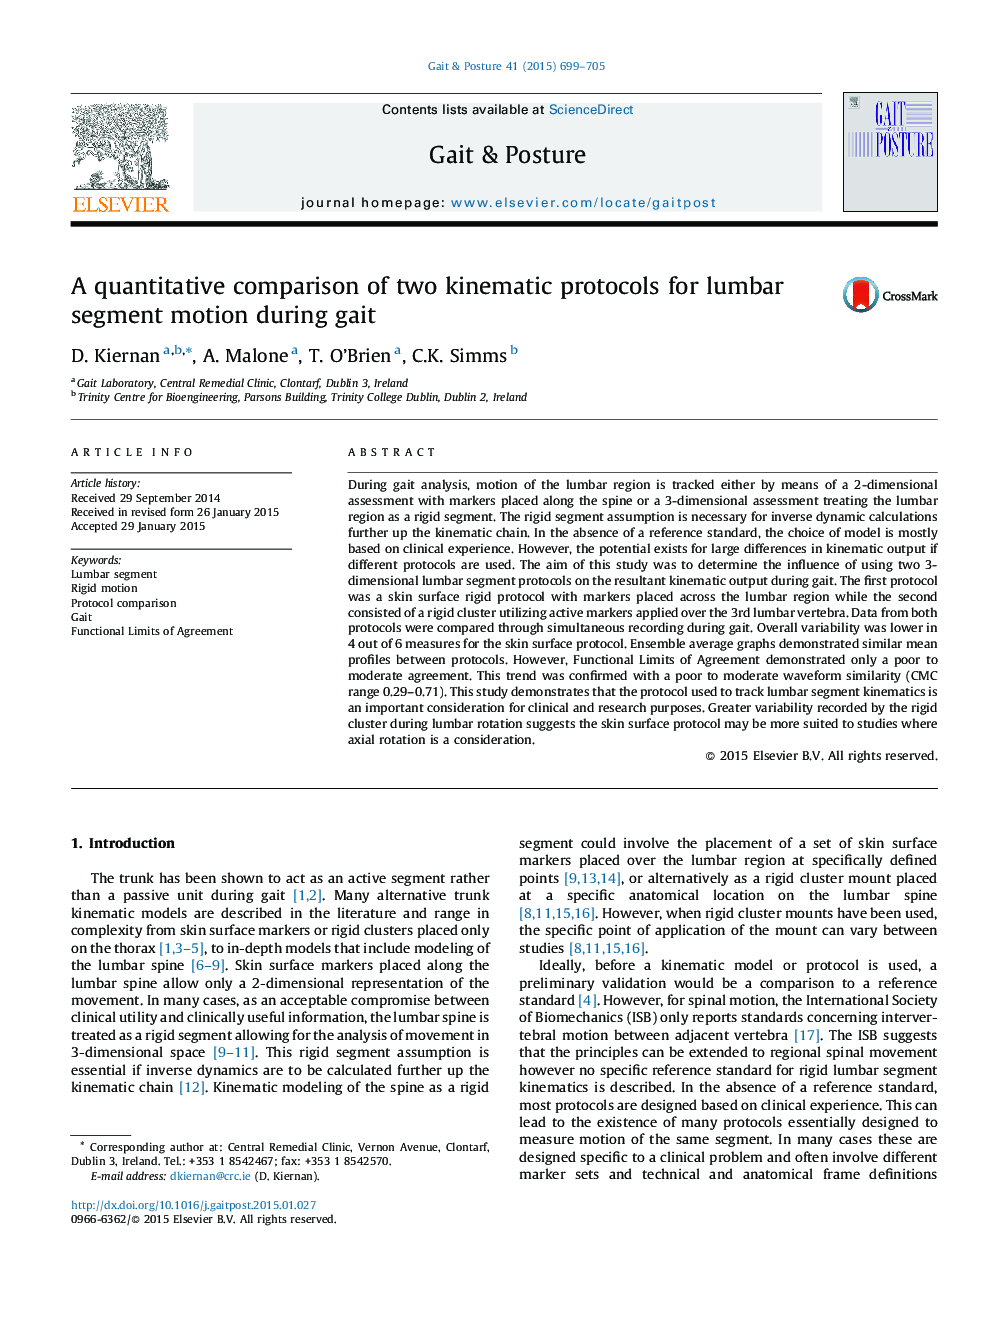 A quantitative comparison of two kinematic protocols for lumbar segment motion during gait